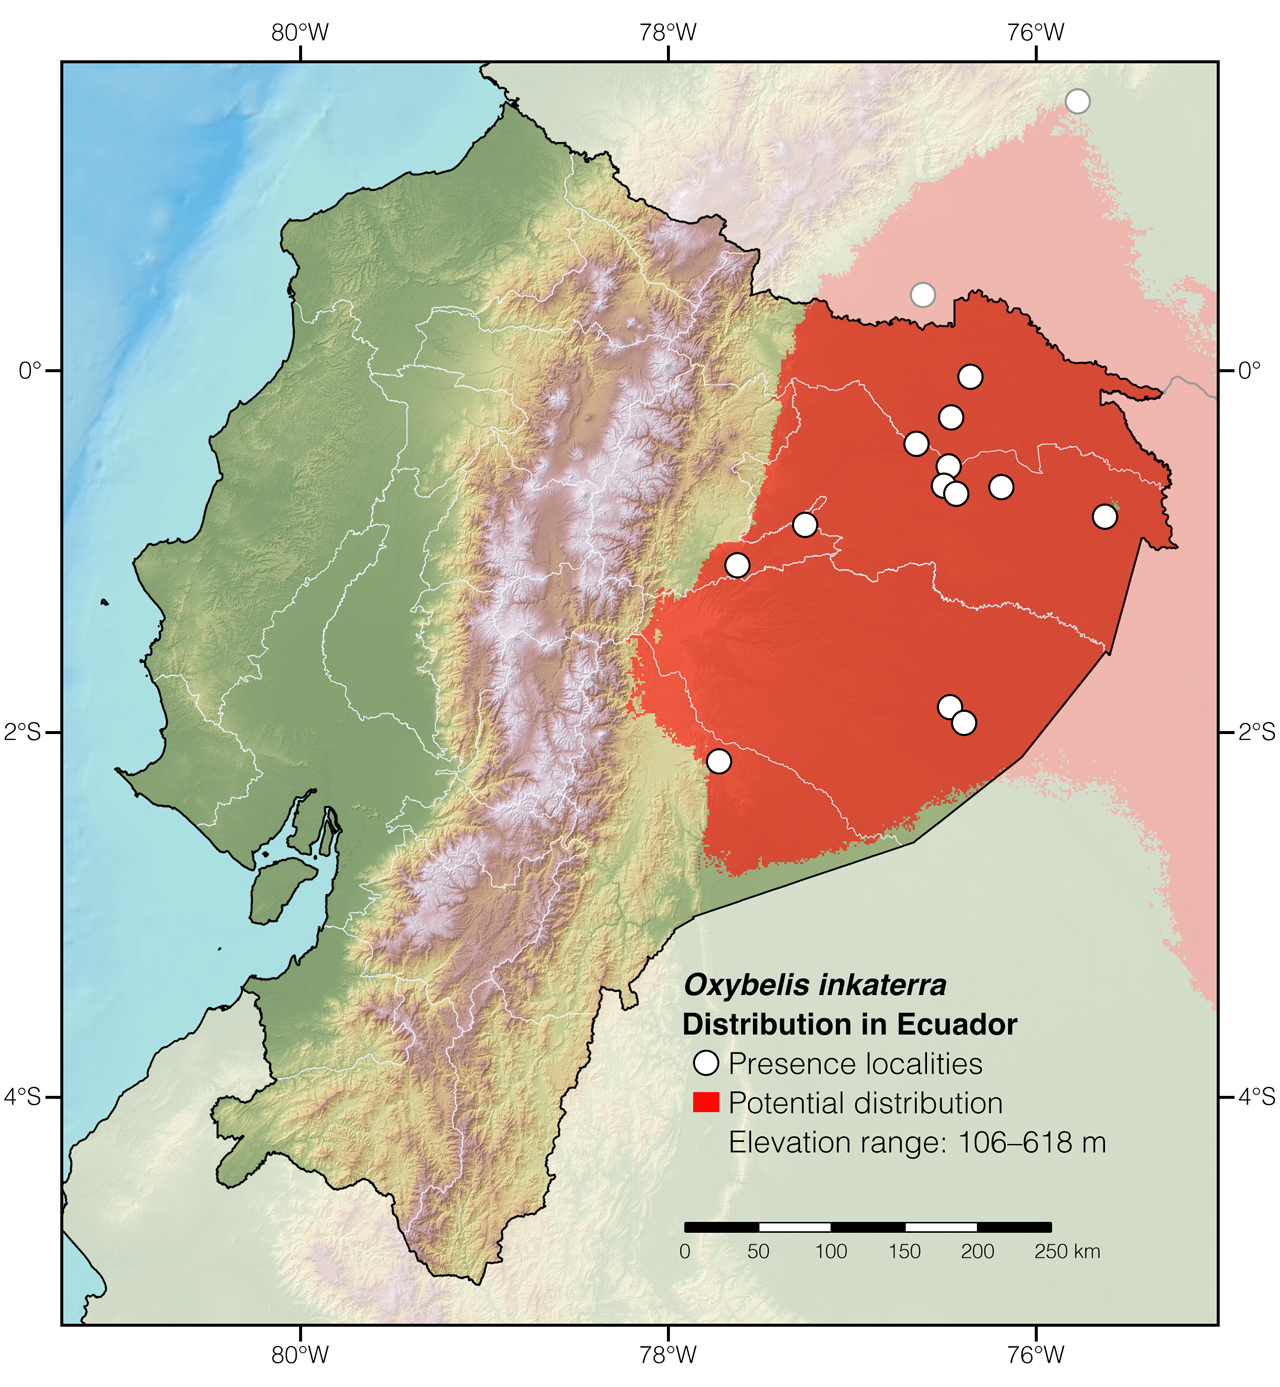 Distribution of Oxybelis inkaterra in Ecuador